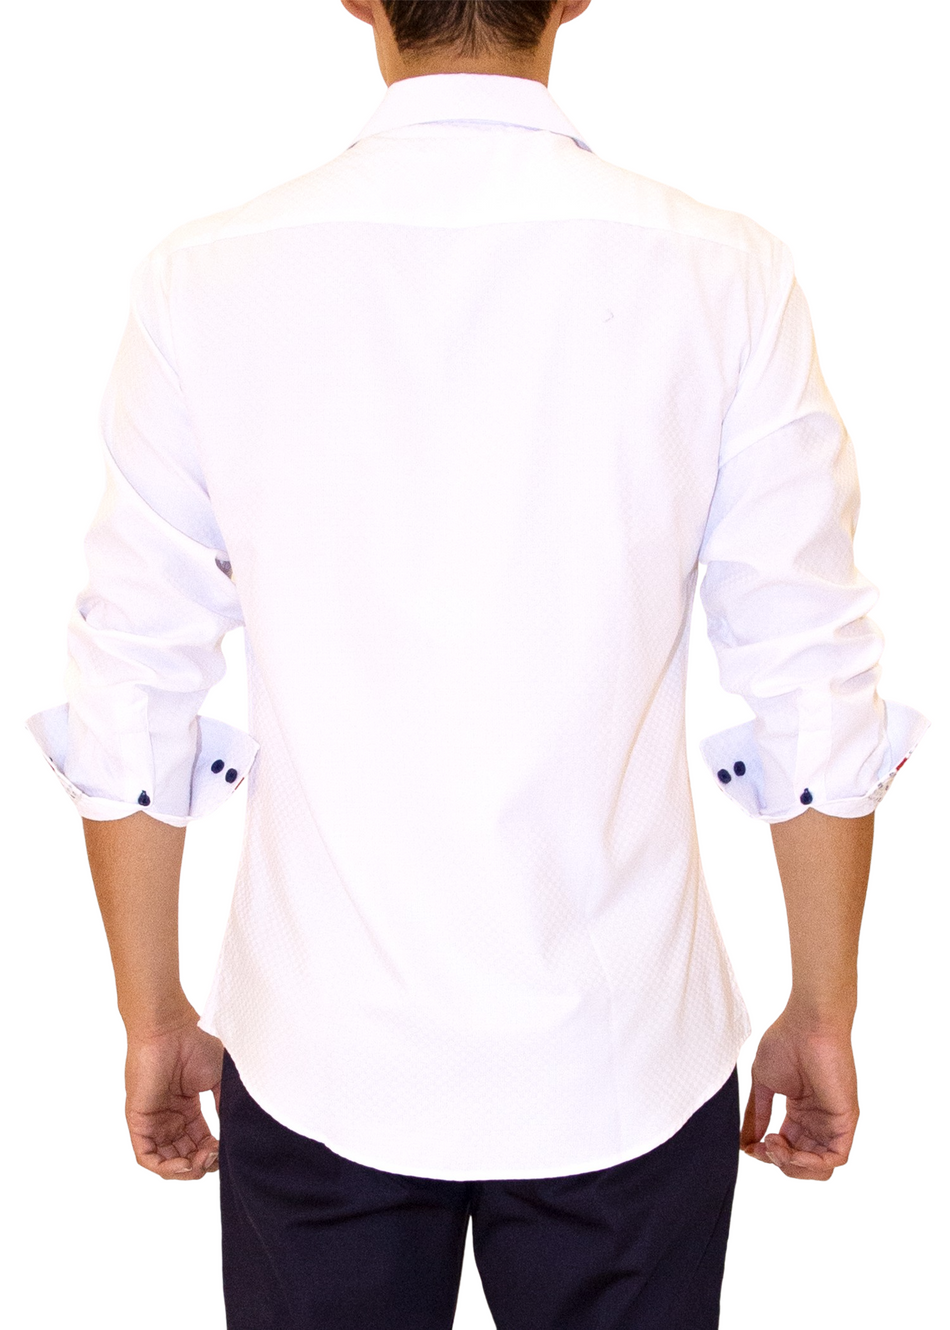 Checkered Texture Long Sleeve Dress Shirt White